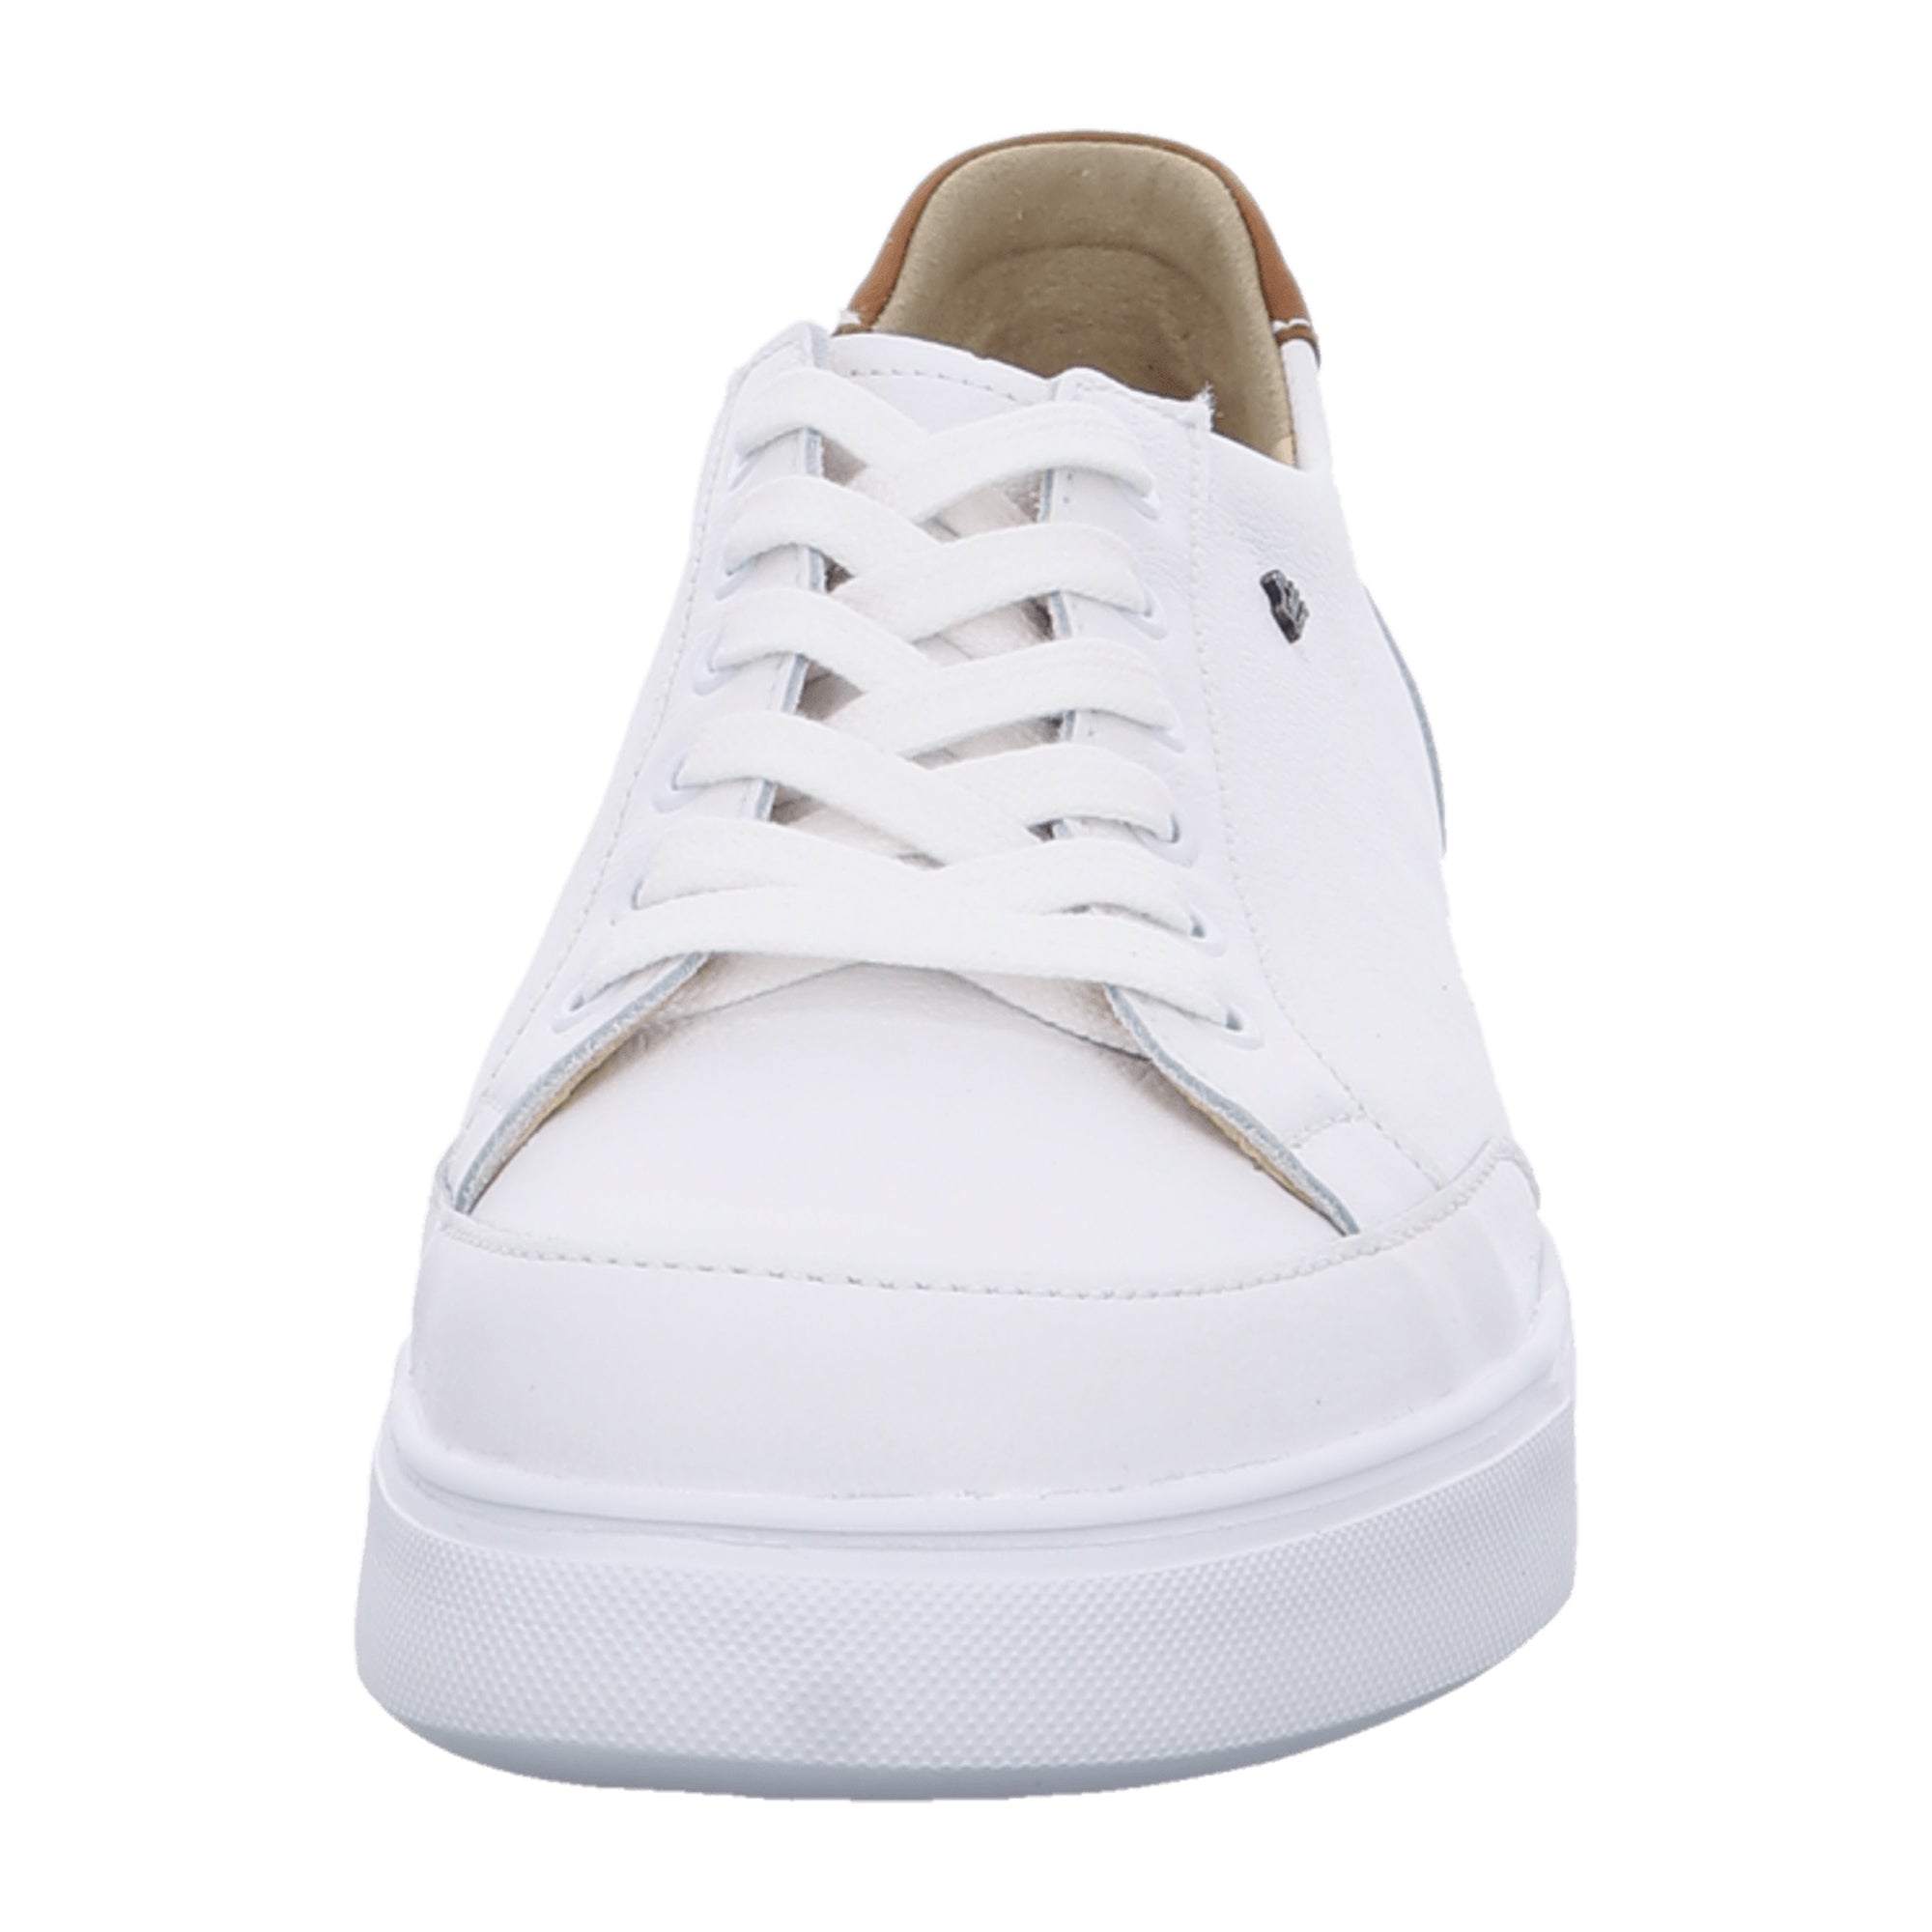 Finn Comfort Brandon Men's Comfort Shoes, Stylish White Leather